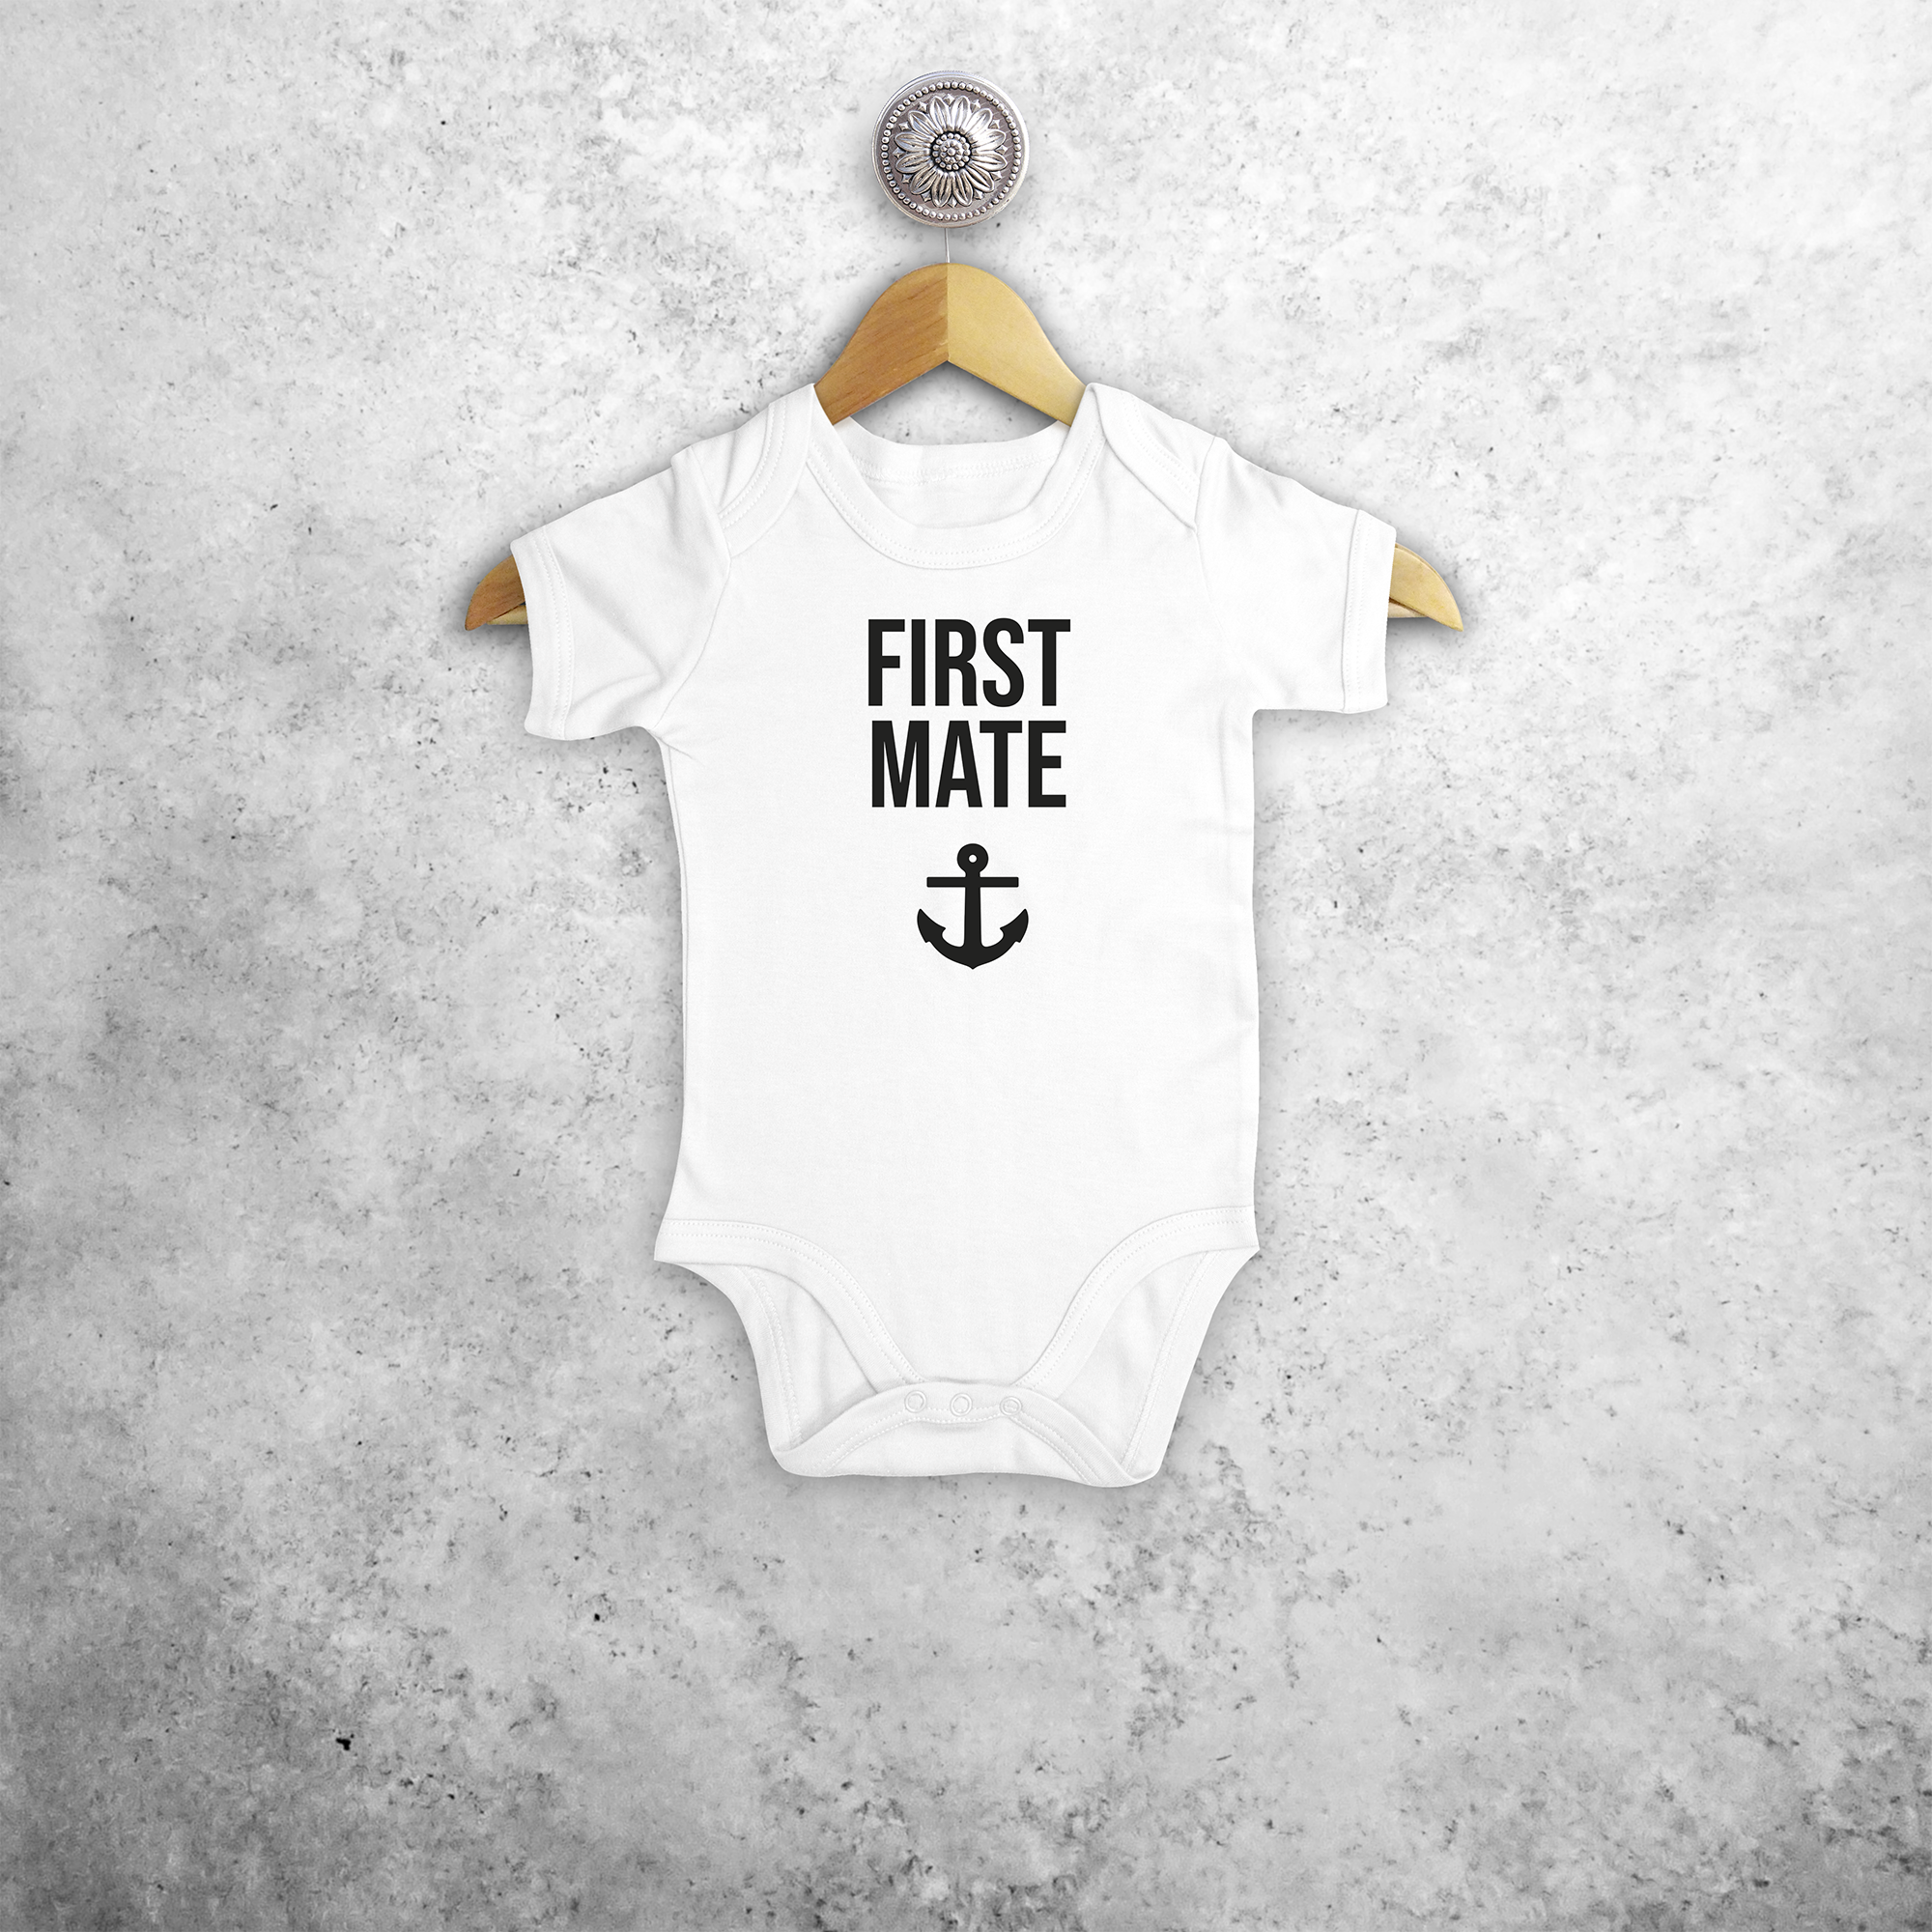 'First mate' baby kruippakje met korte mouwen